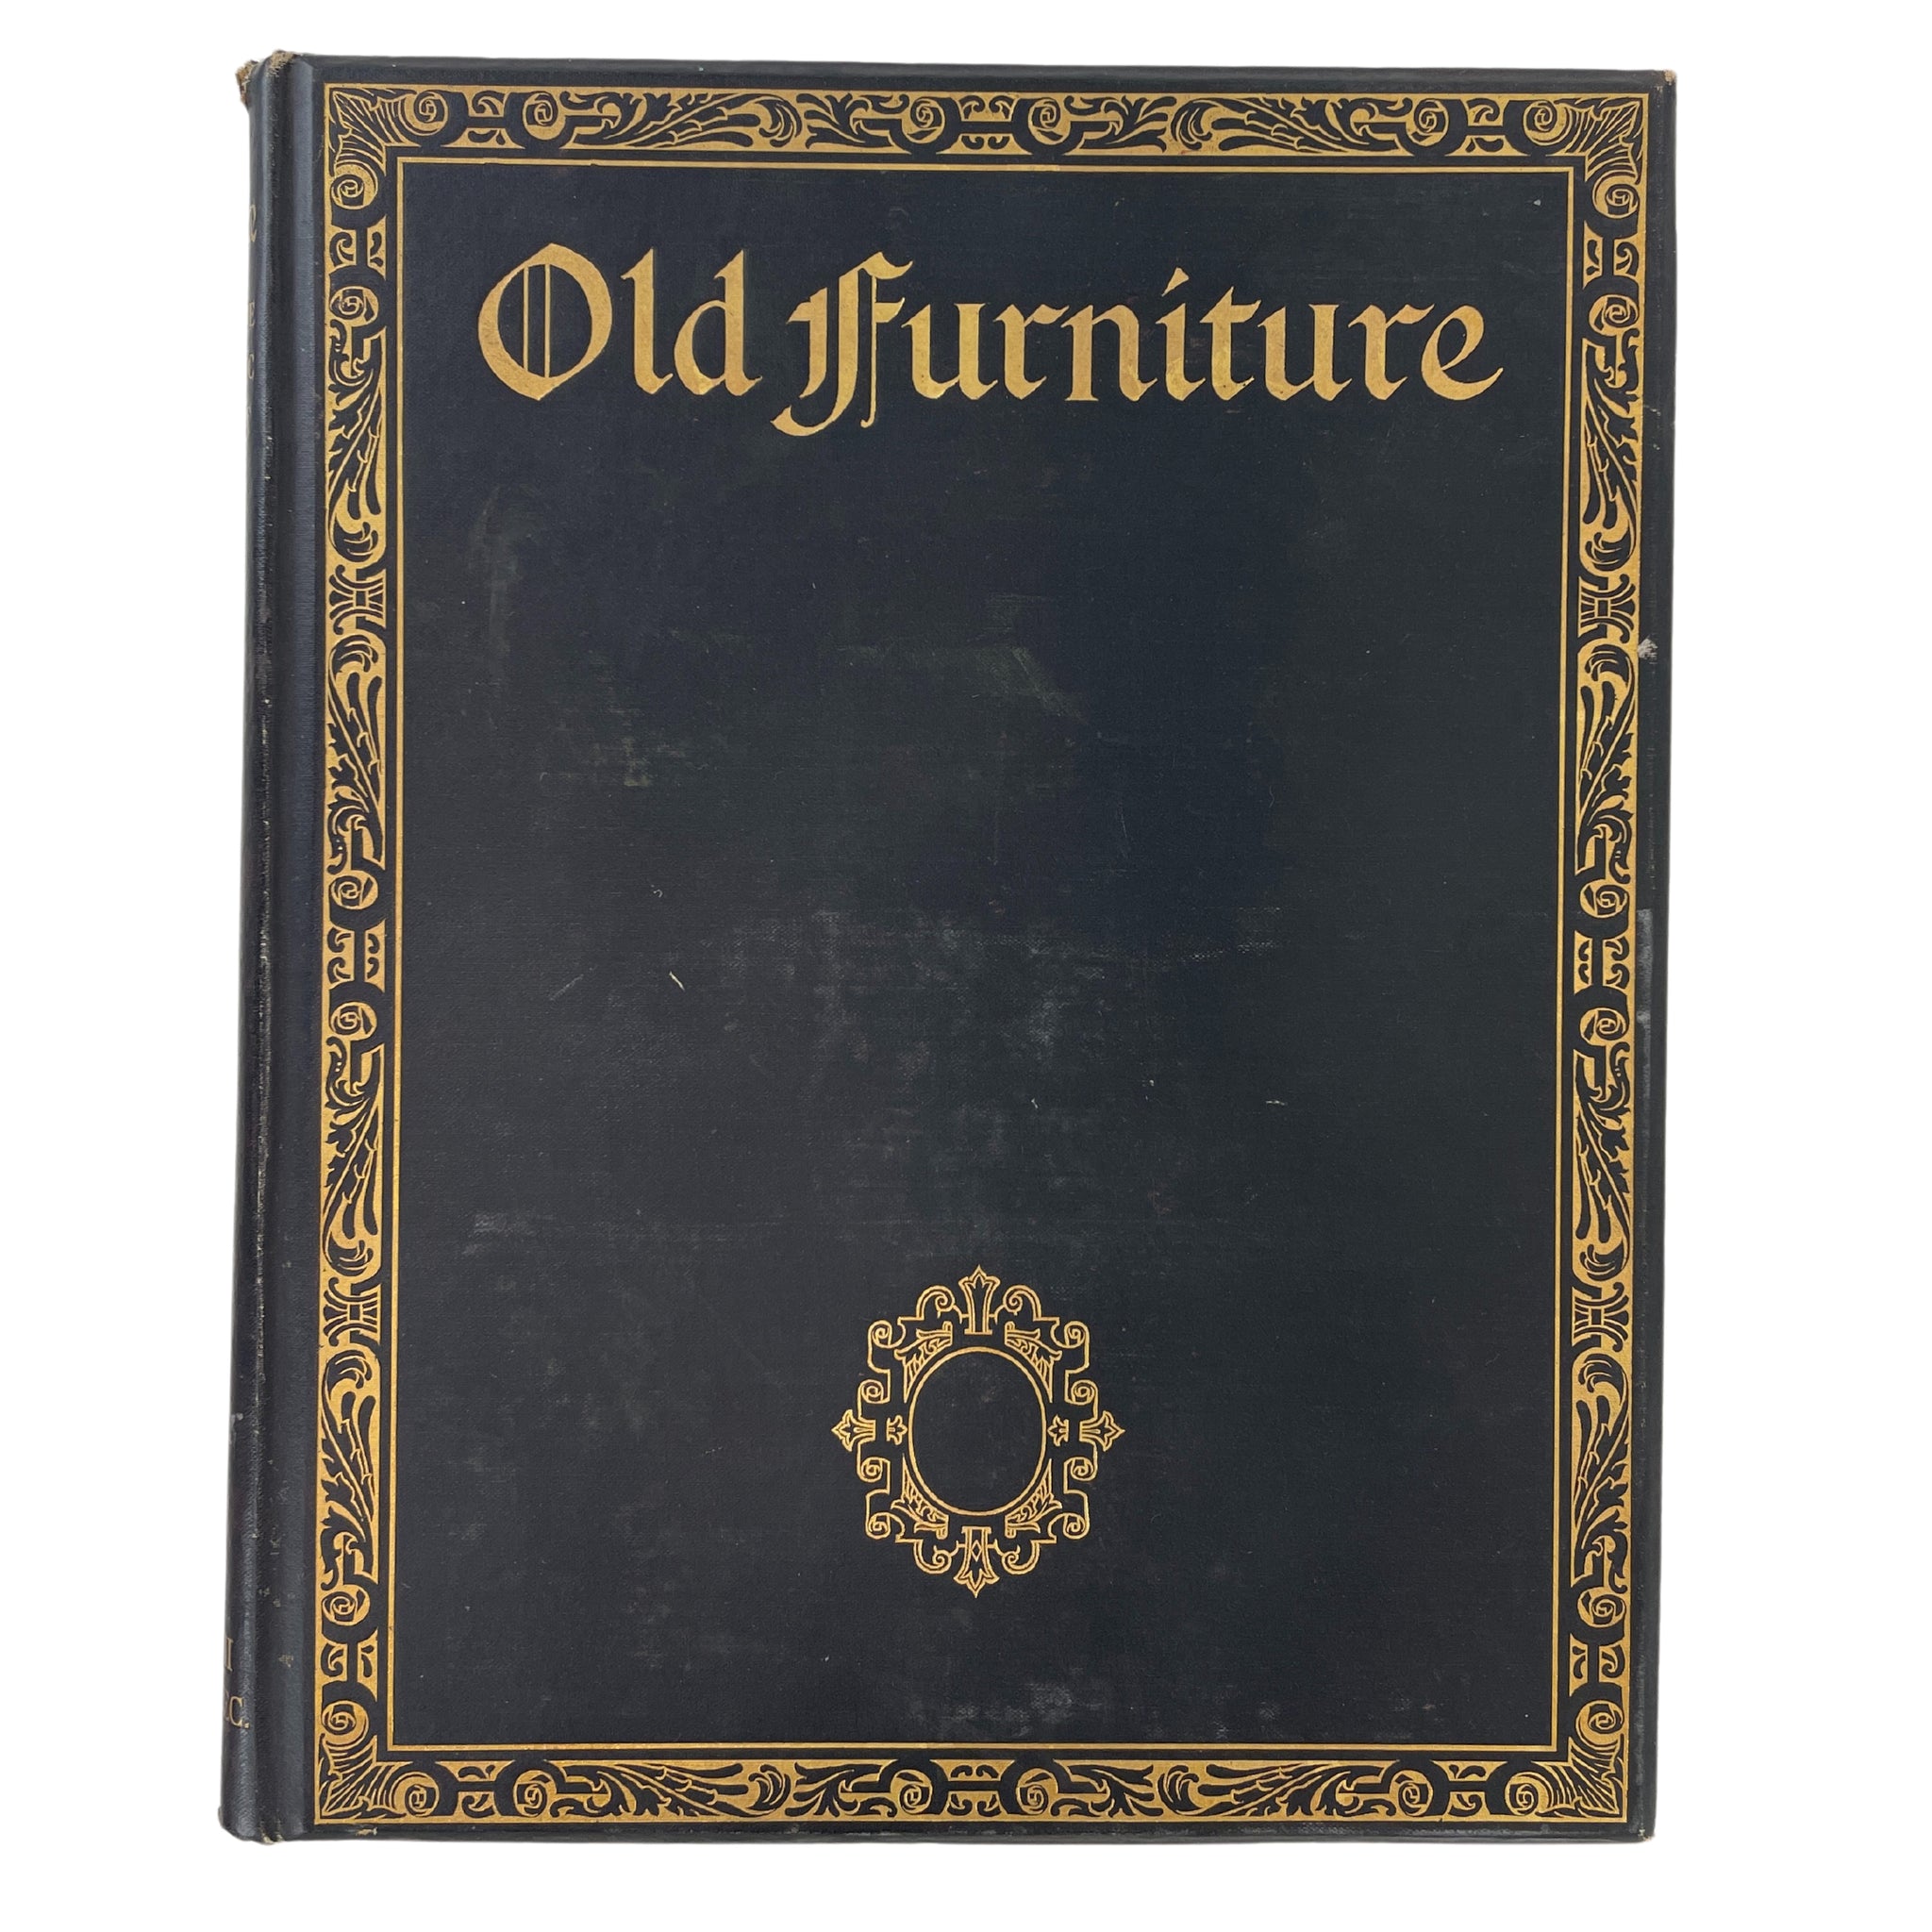 [Furniture & Design] Old Furniture: A Magazine of Domestic Ornament (Volumes 4-8), 1928-29